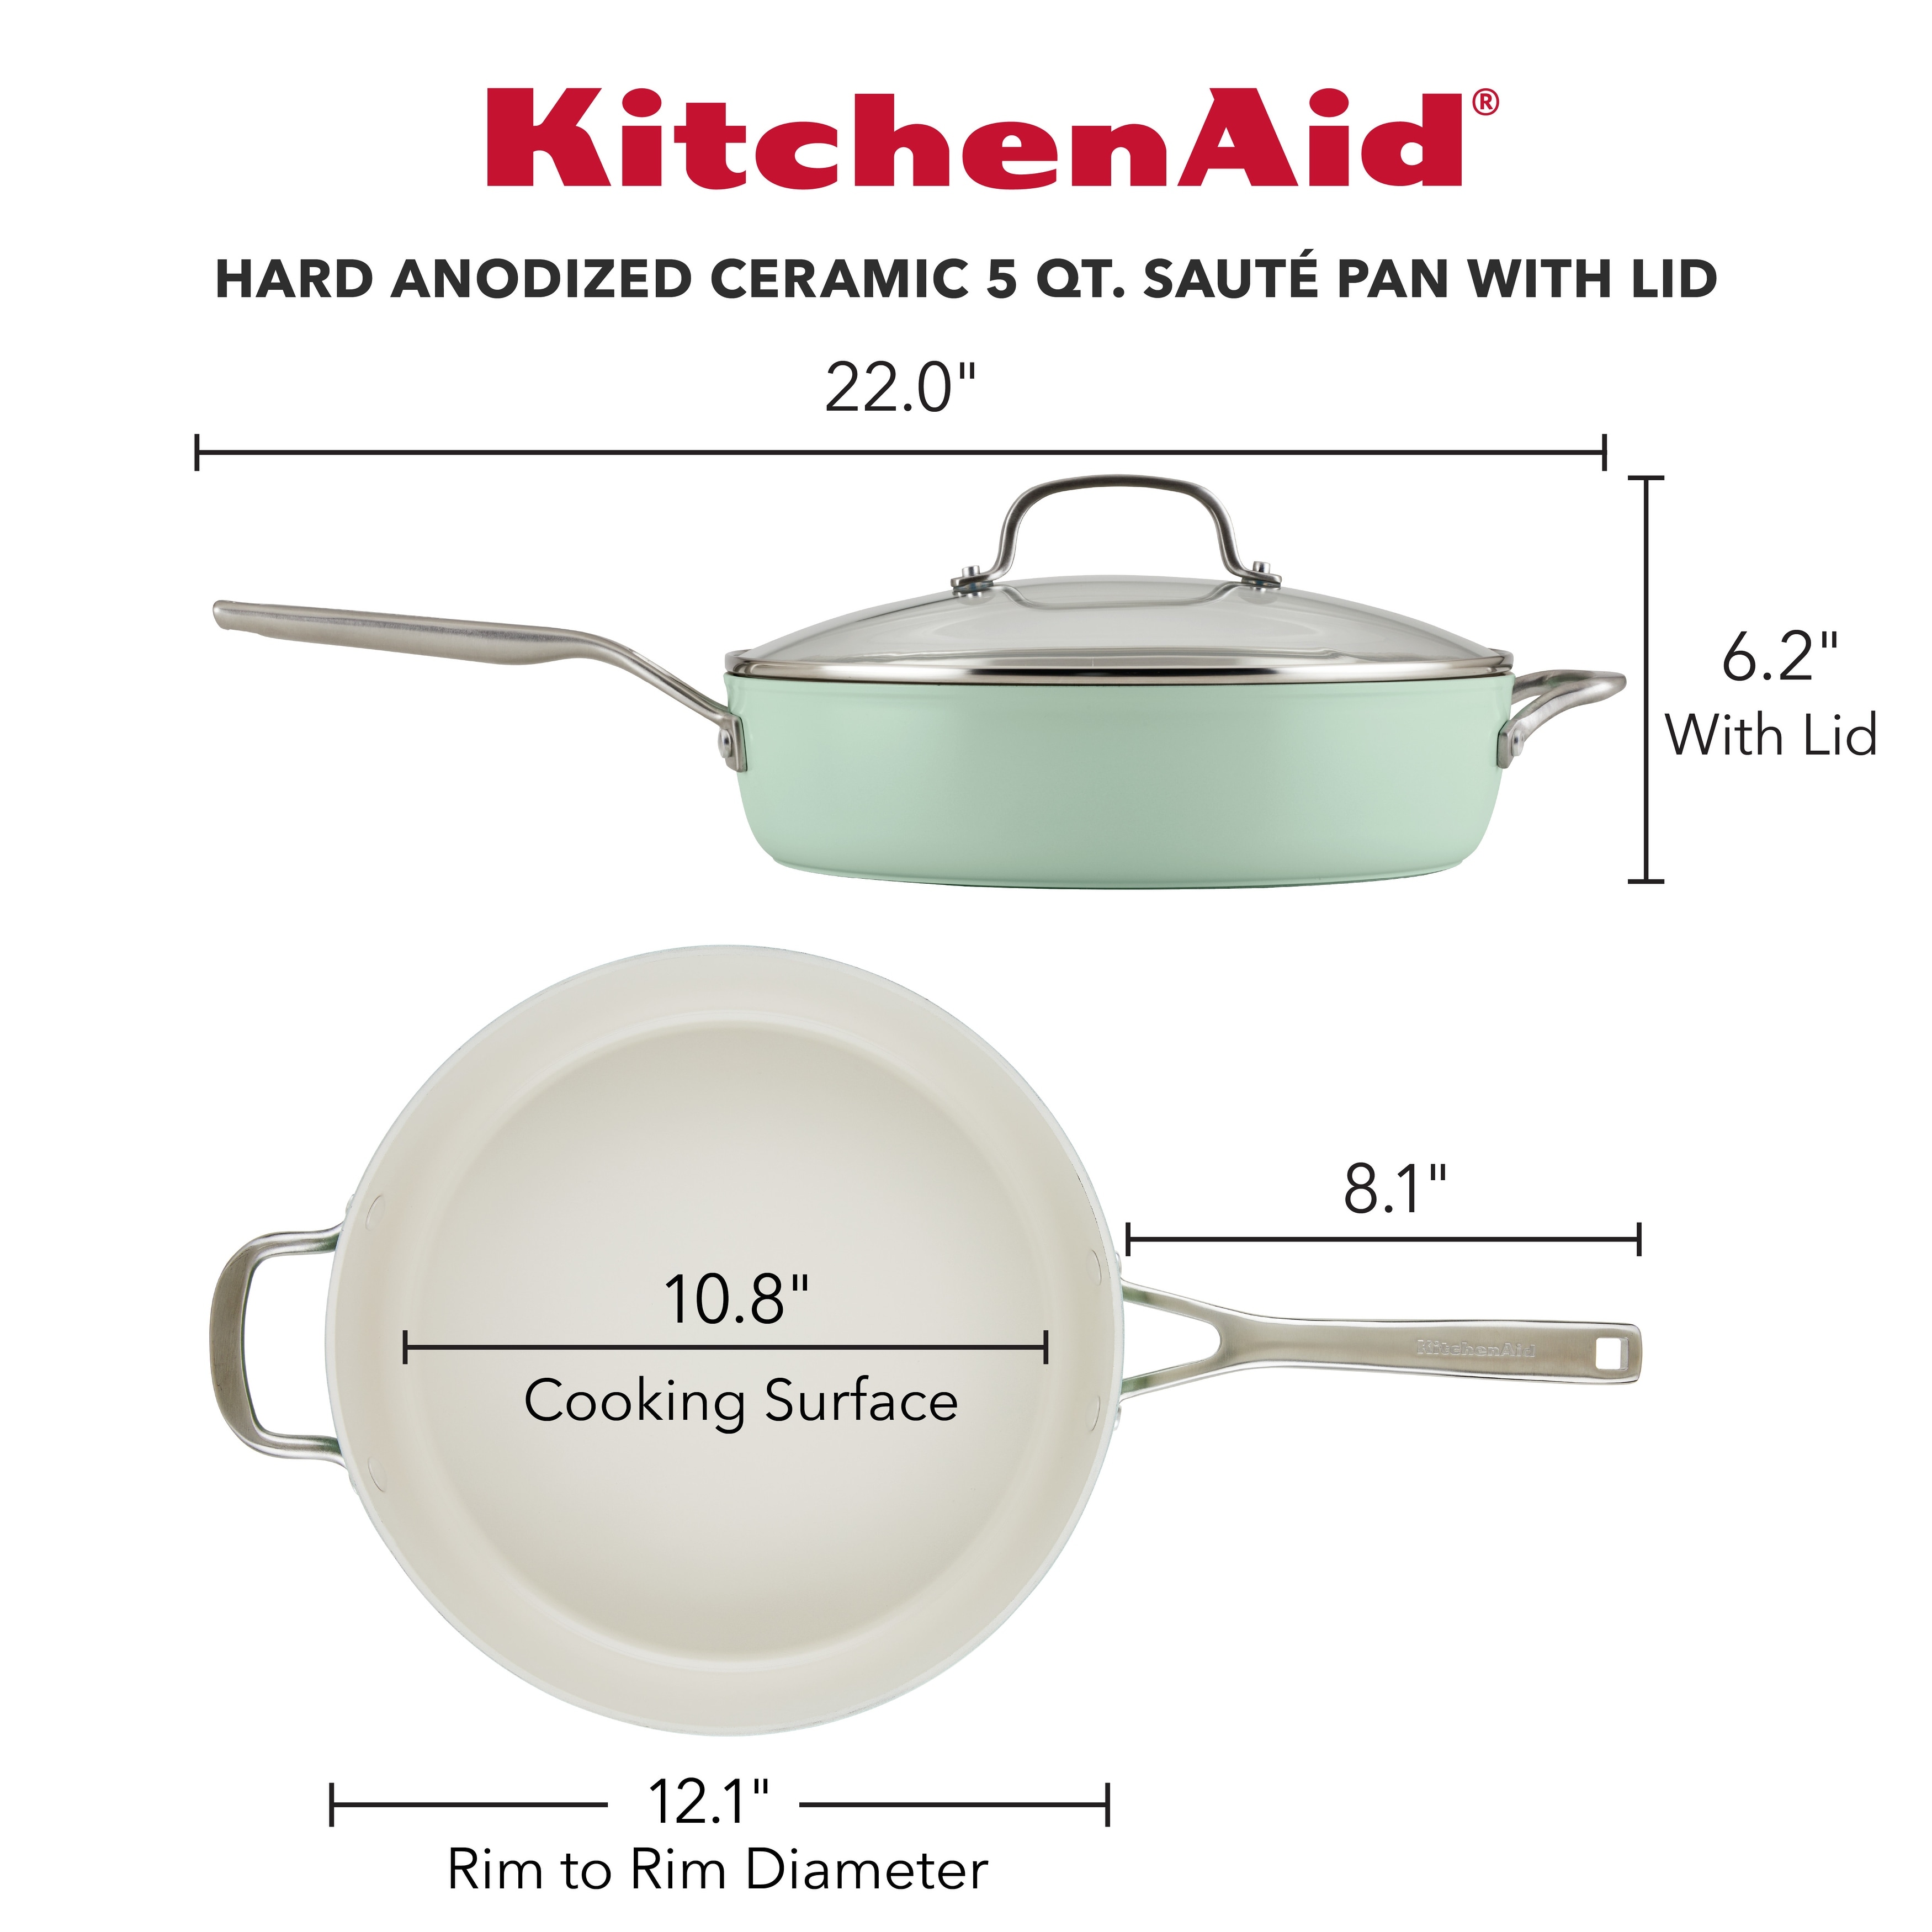 Kitchenaid Hard Anodized 5qt Nonstick Ceramic Saute Pan With Lid